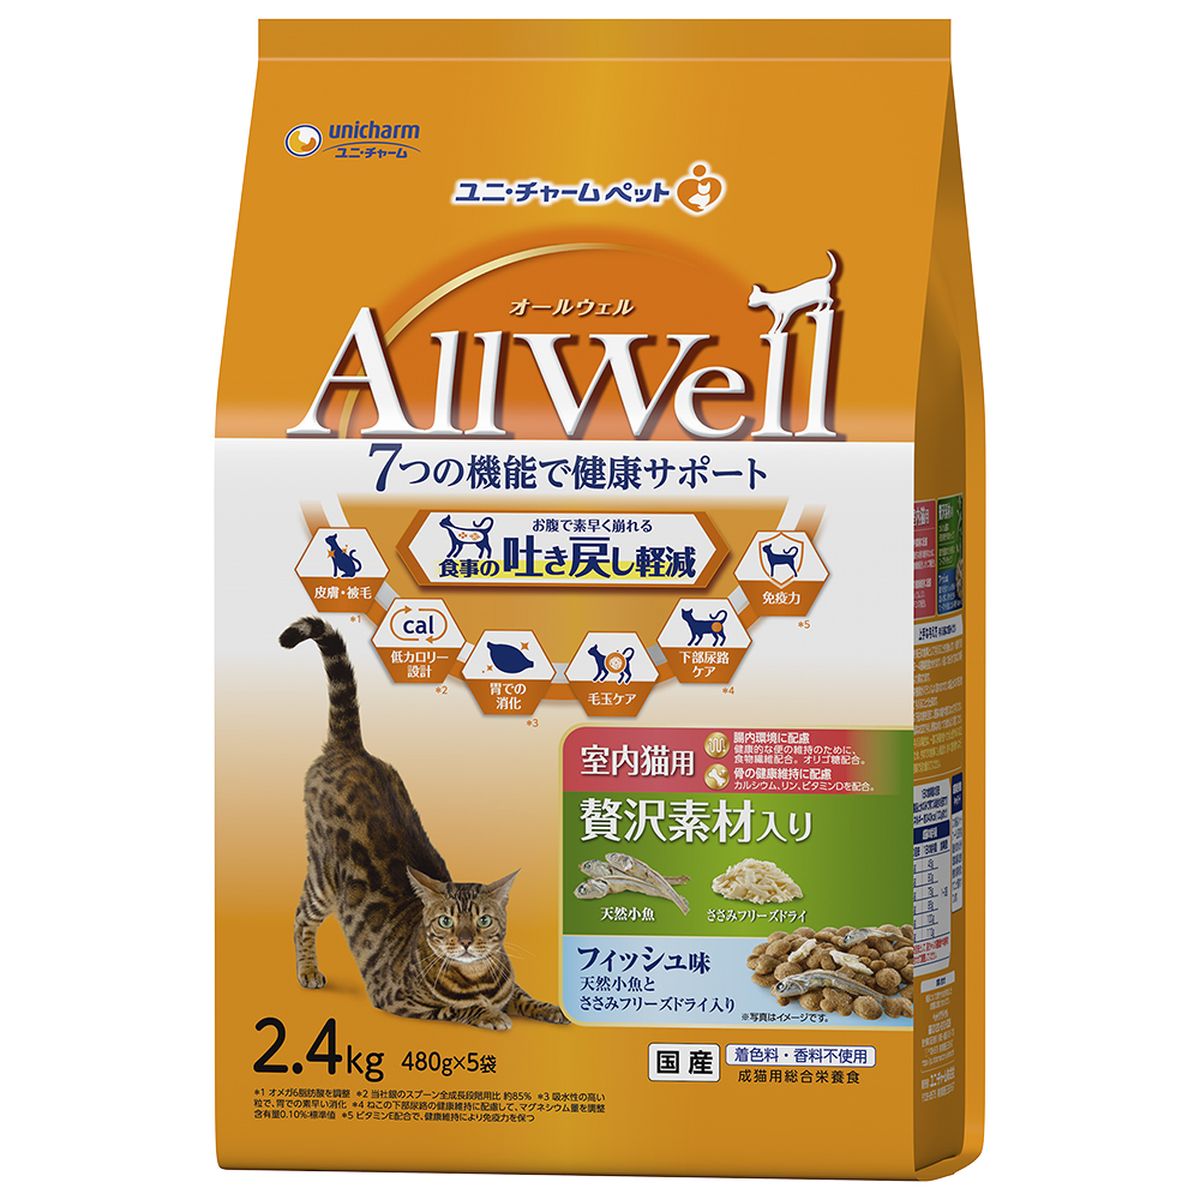 AllWell室内猫用贅沢素材入りフィッシュ味天然小魚とささみフリーズドライ入り2.4kg×4袋